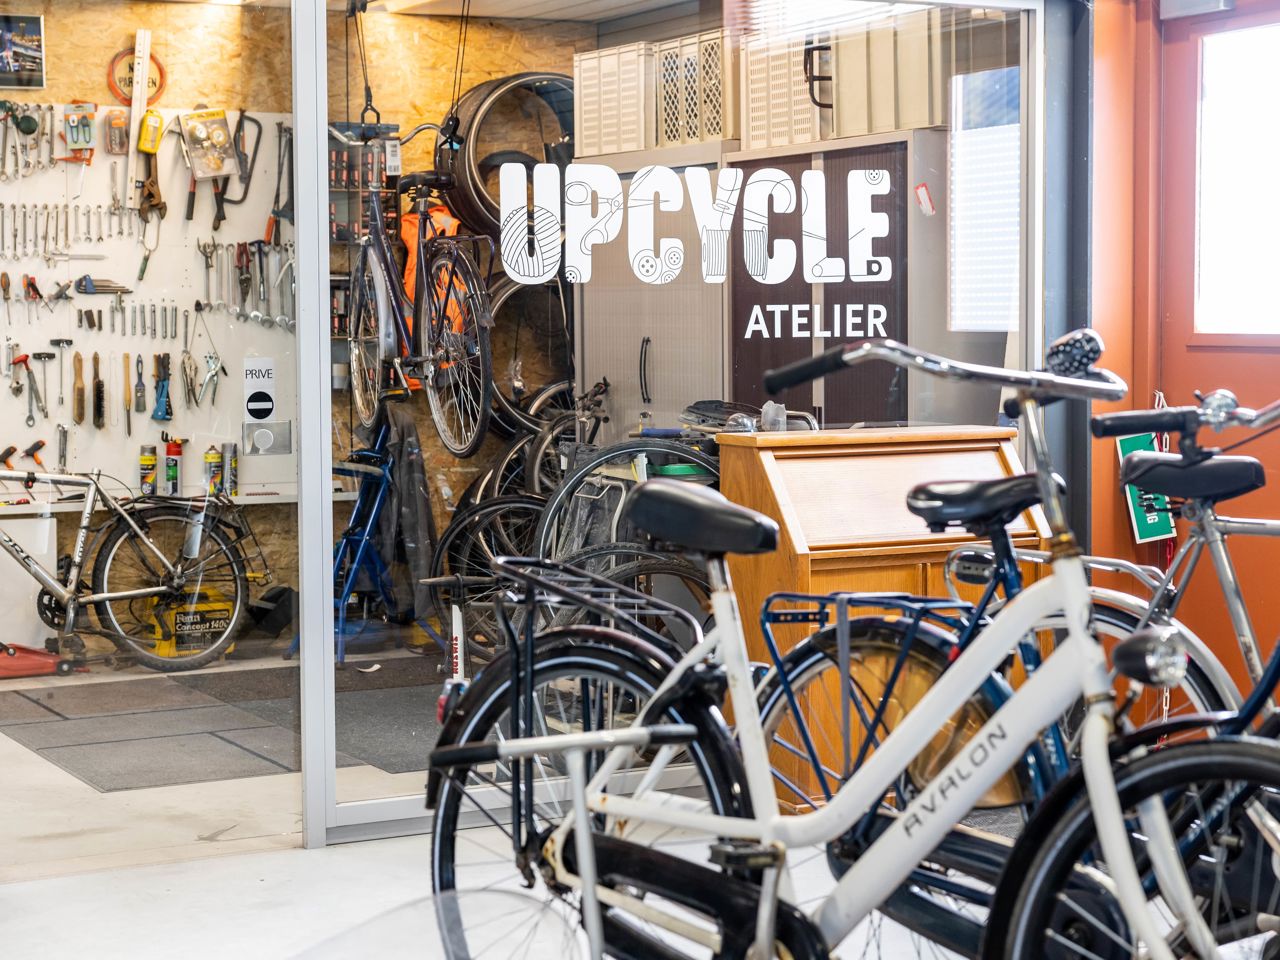 Estafette Oosterwolde Upcycle Atelier